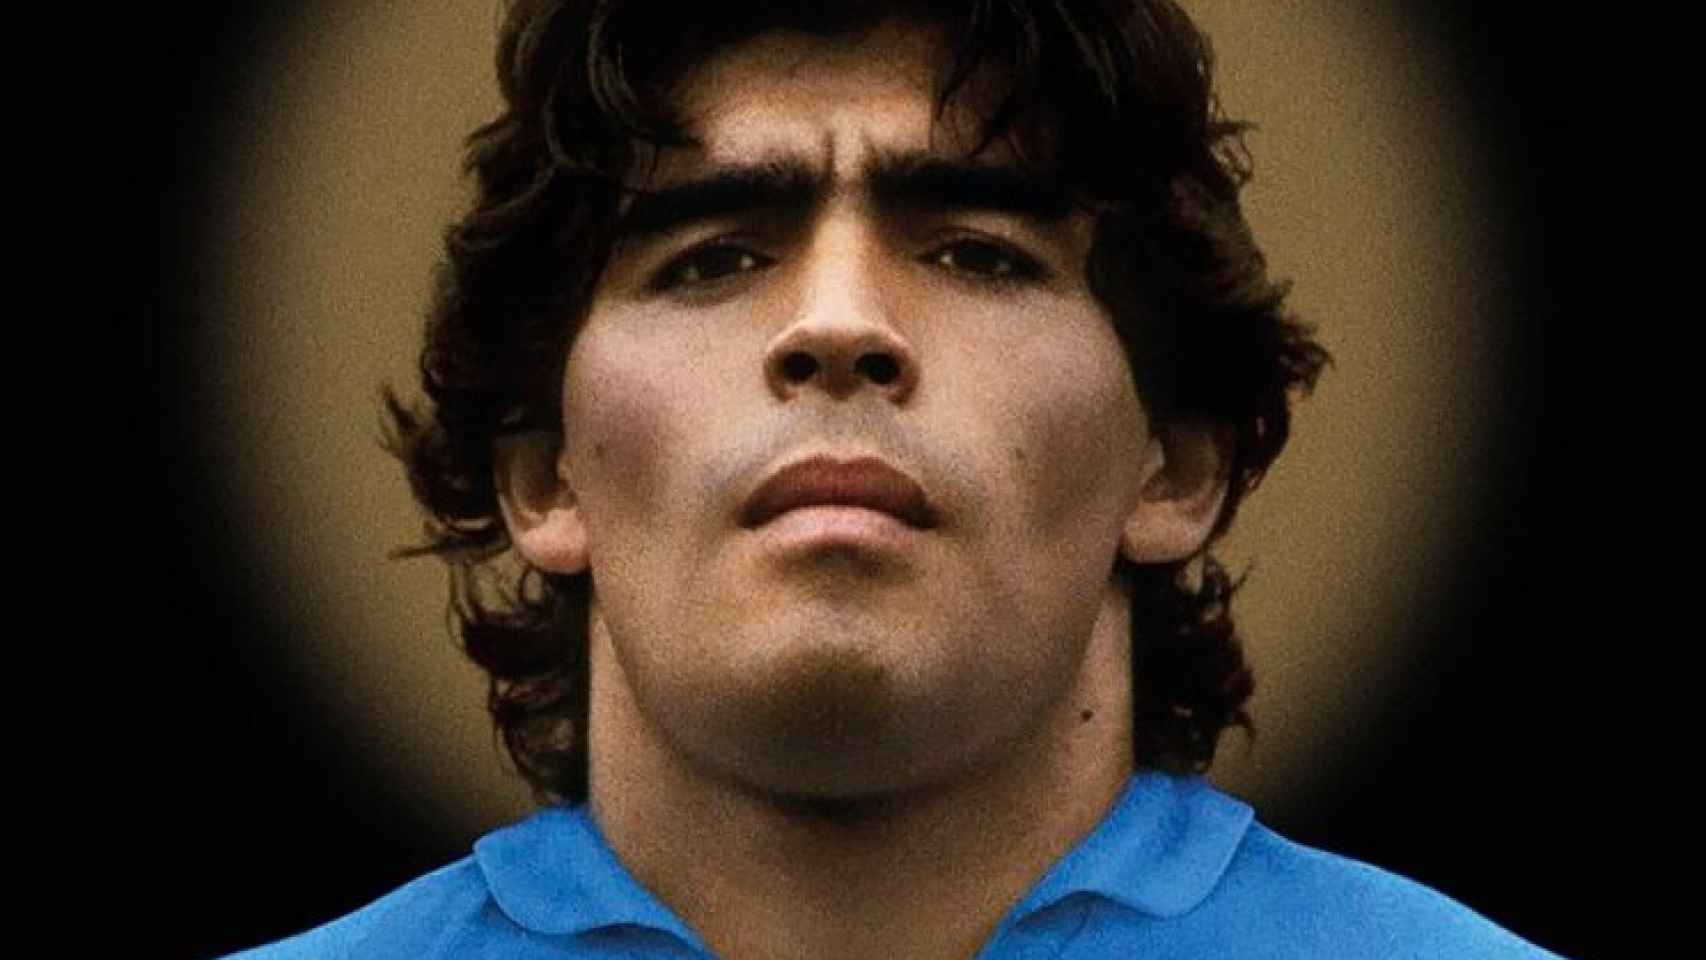 El documental 'Diego Maradona', dirigido por Asif Kapadia